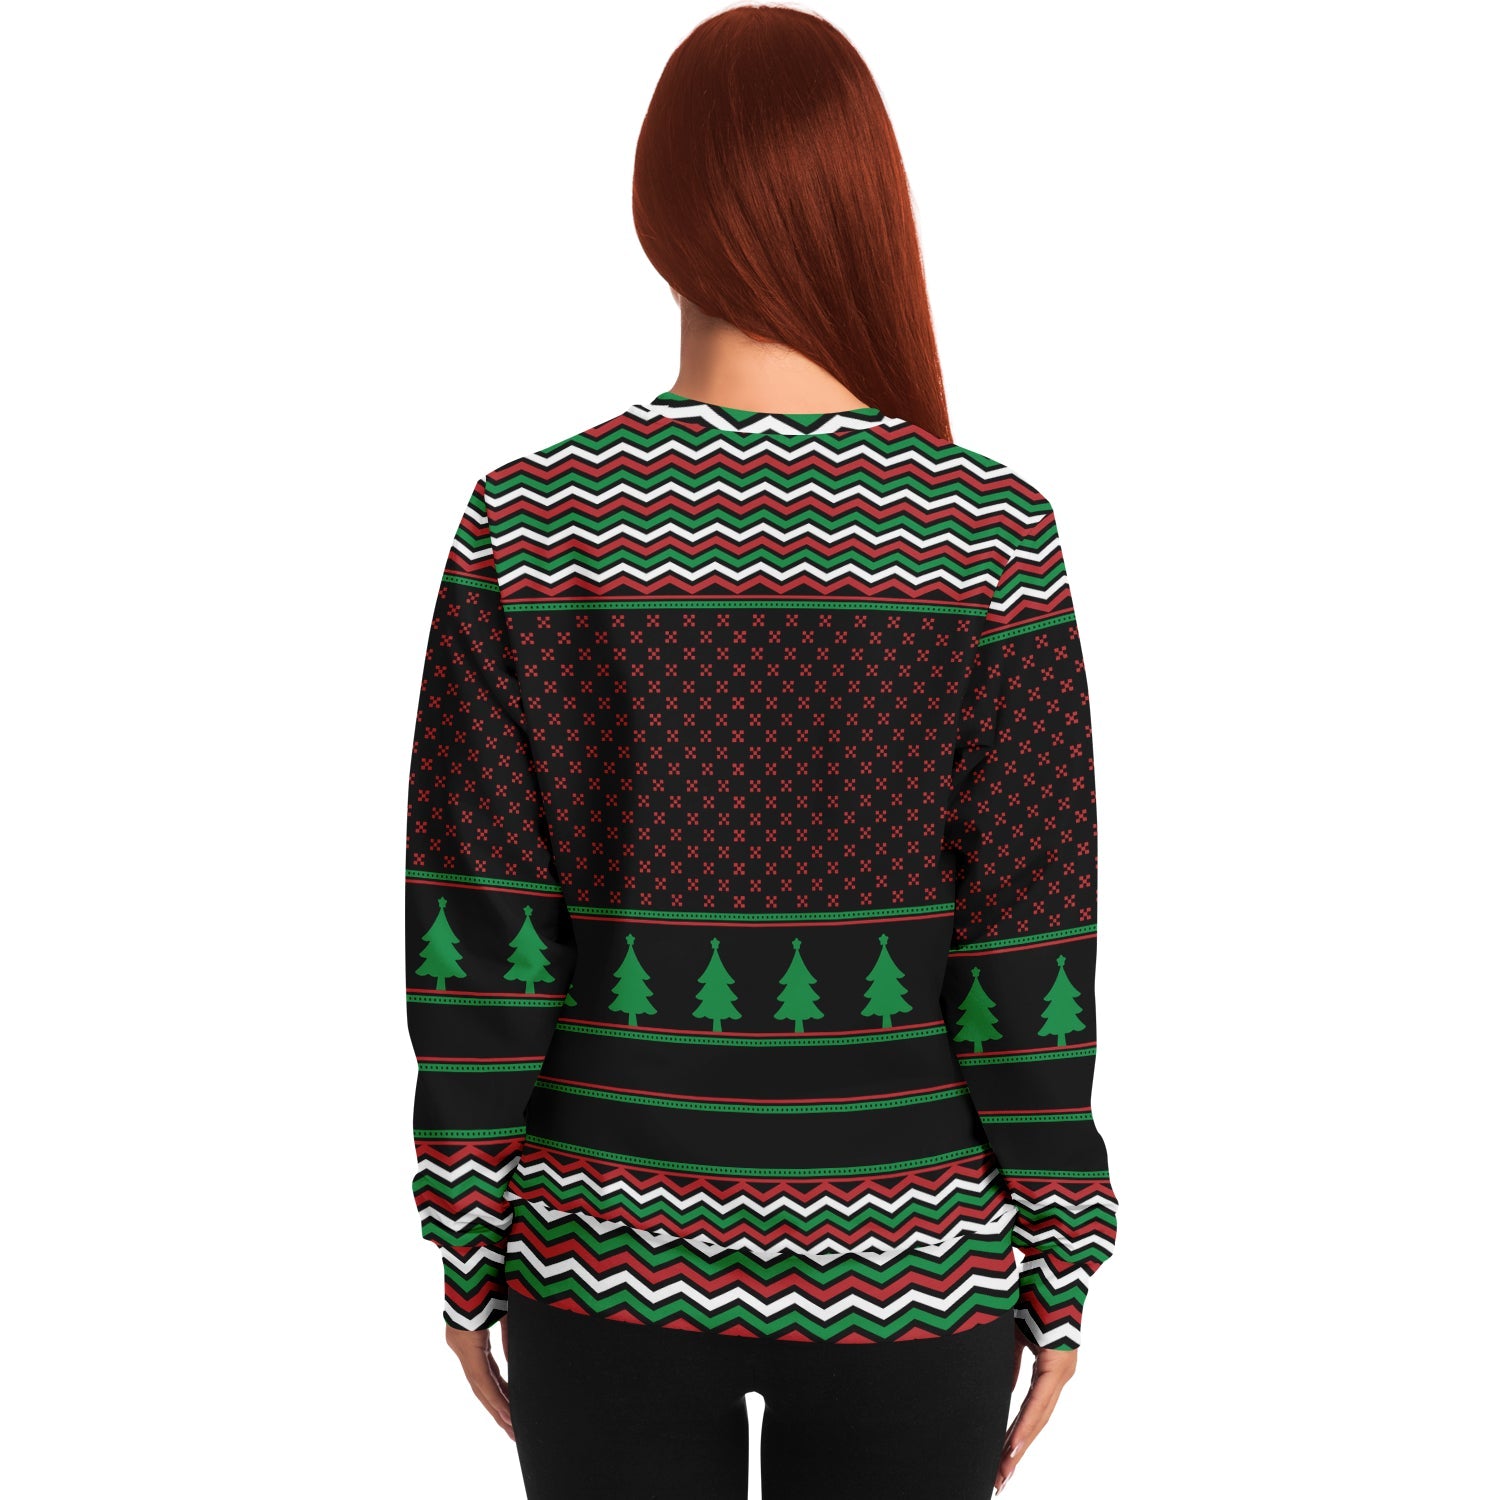 Gingers For Life Ugly Christmas Sweatshirt Fashion Sweatshirt - AOP Subliminator 